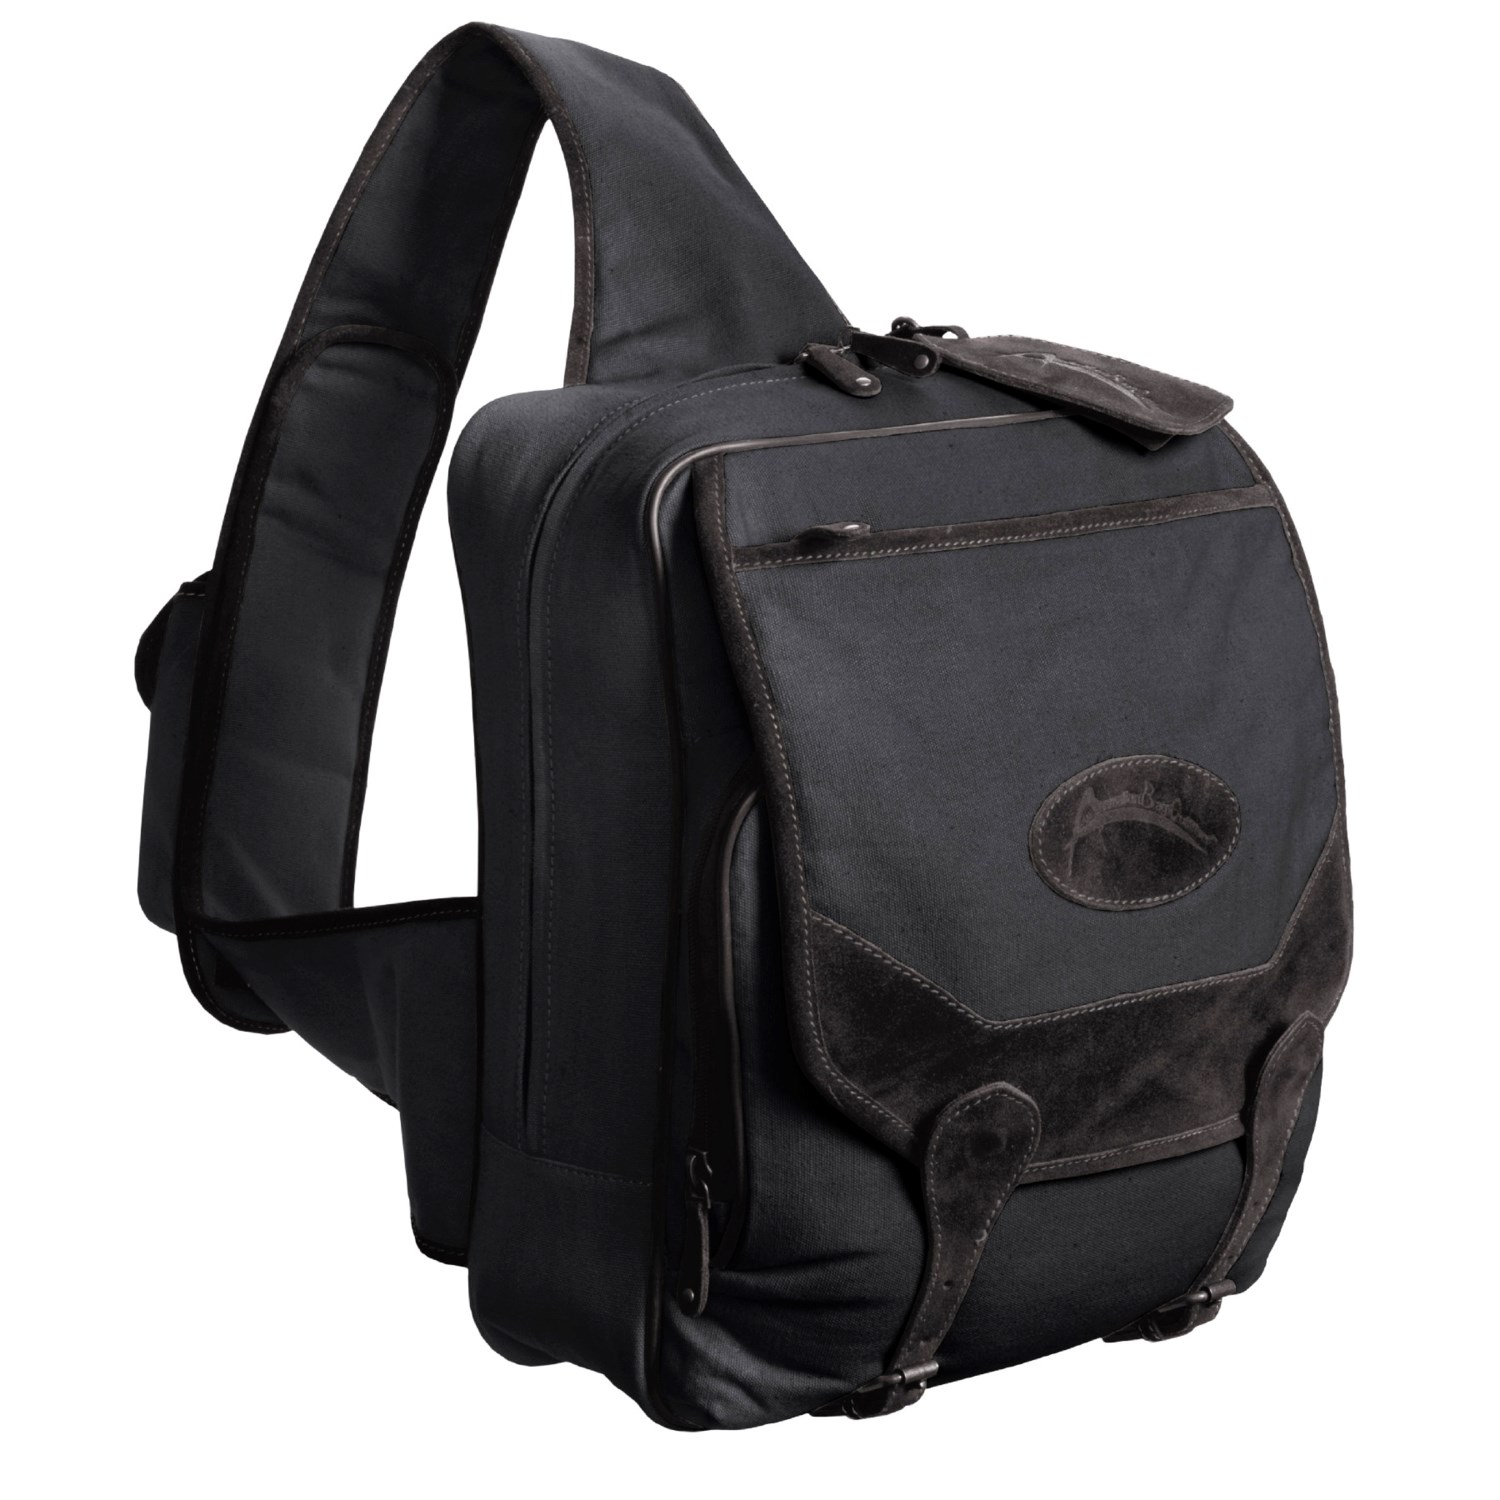 Australian Bag Outfitters Jackaroo Messenger Bag - Canvas, Leather Trim 1104W - Save 42%